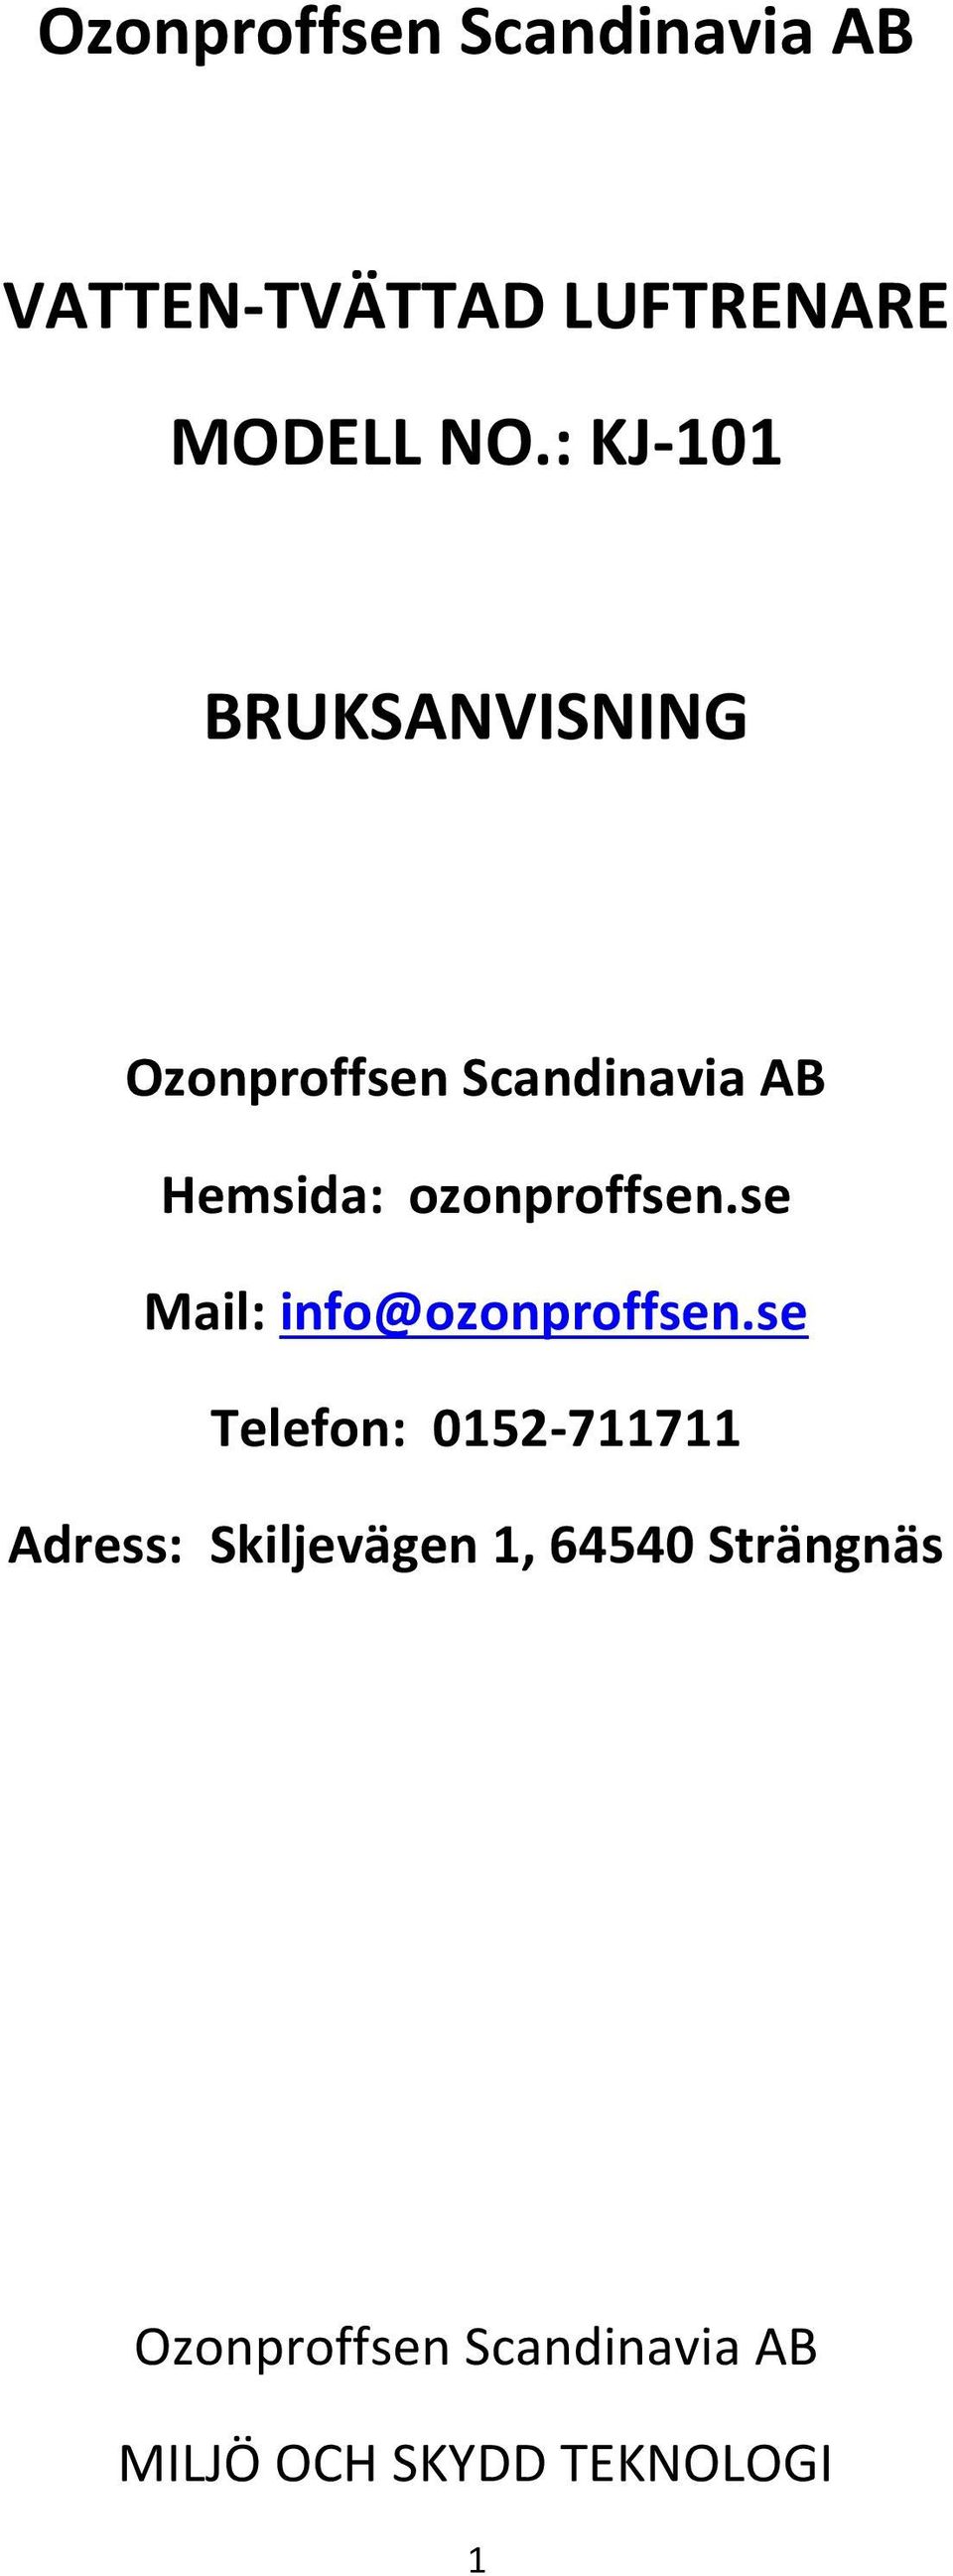 ozonproffsen.se Mail: info@ozonproffsen.